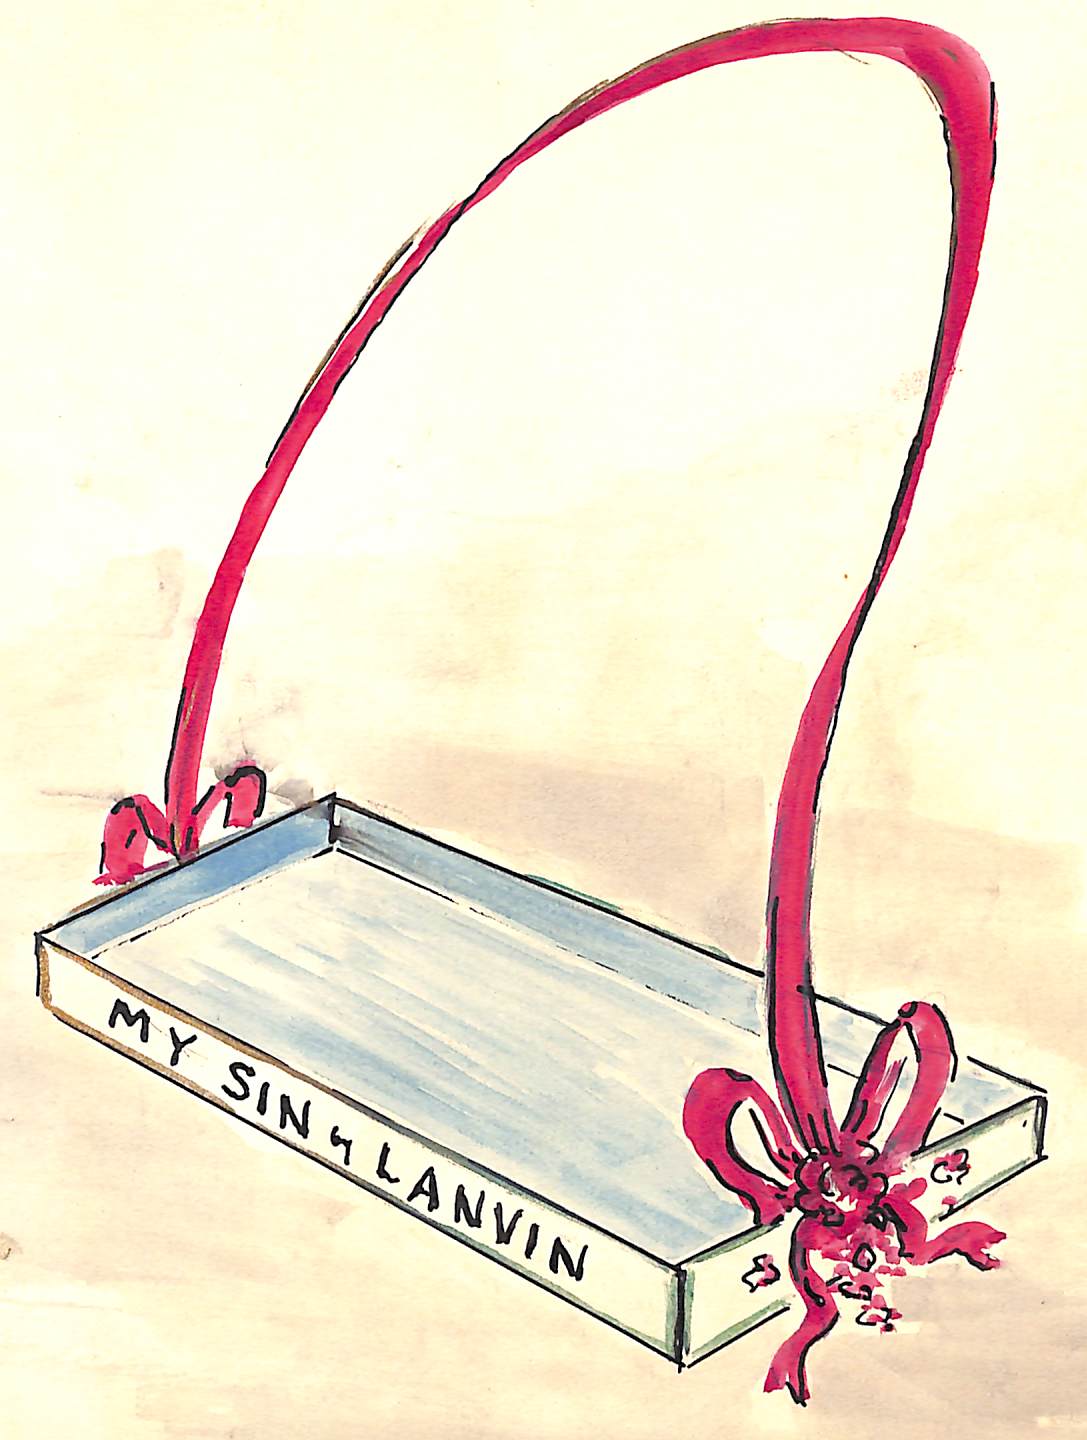 Lanvin Paris My Sin Perfume Tray w/ Ribbon c1950s Advertising Artwork